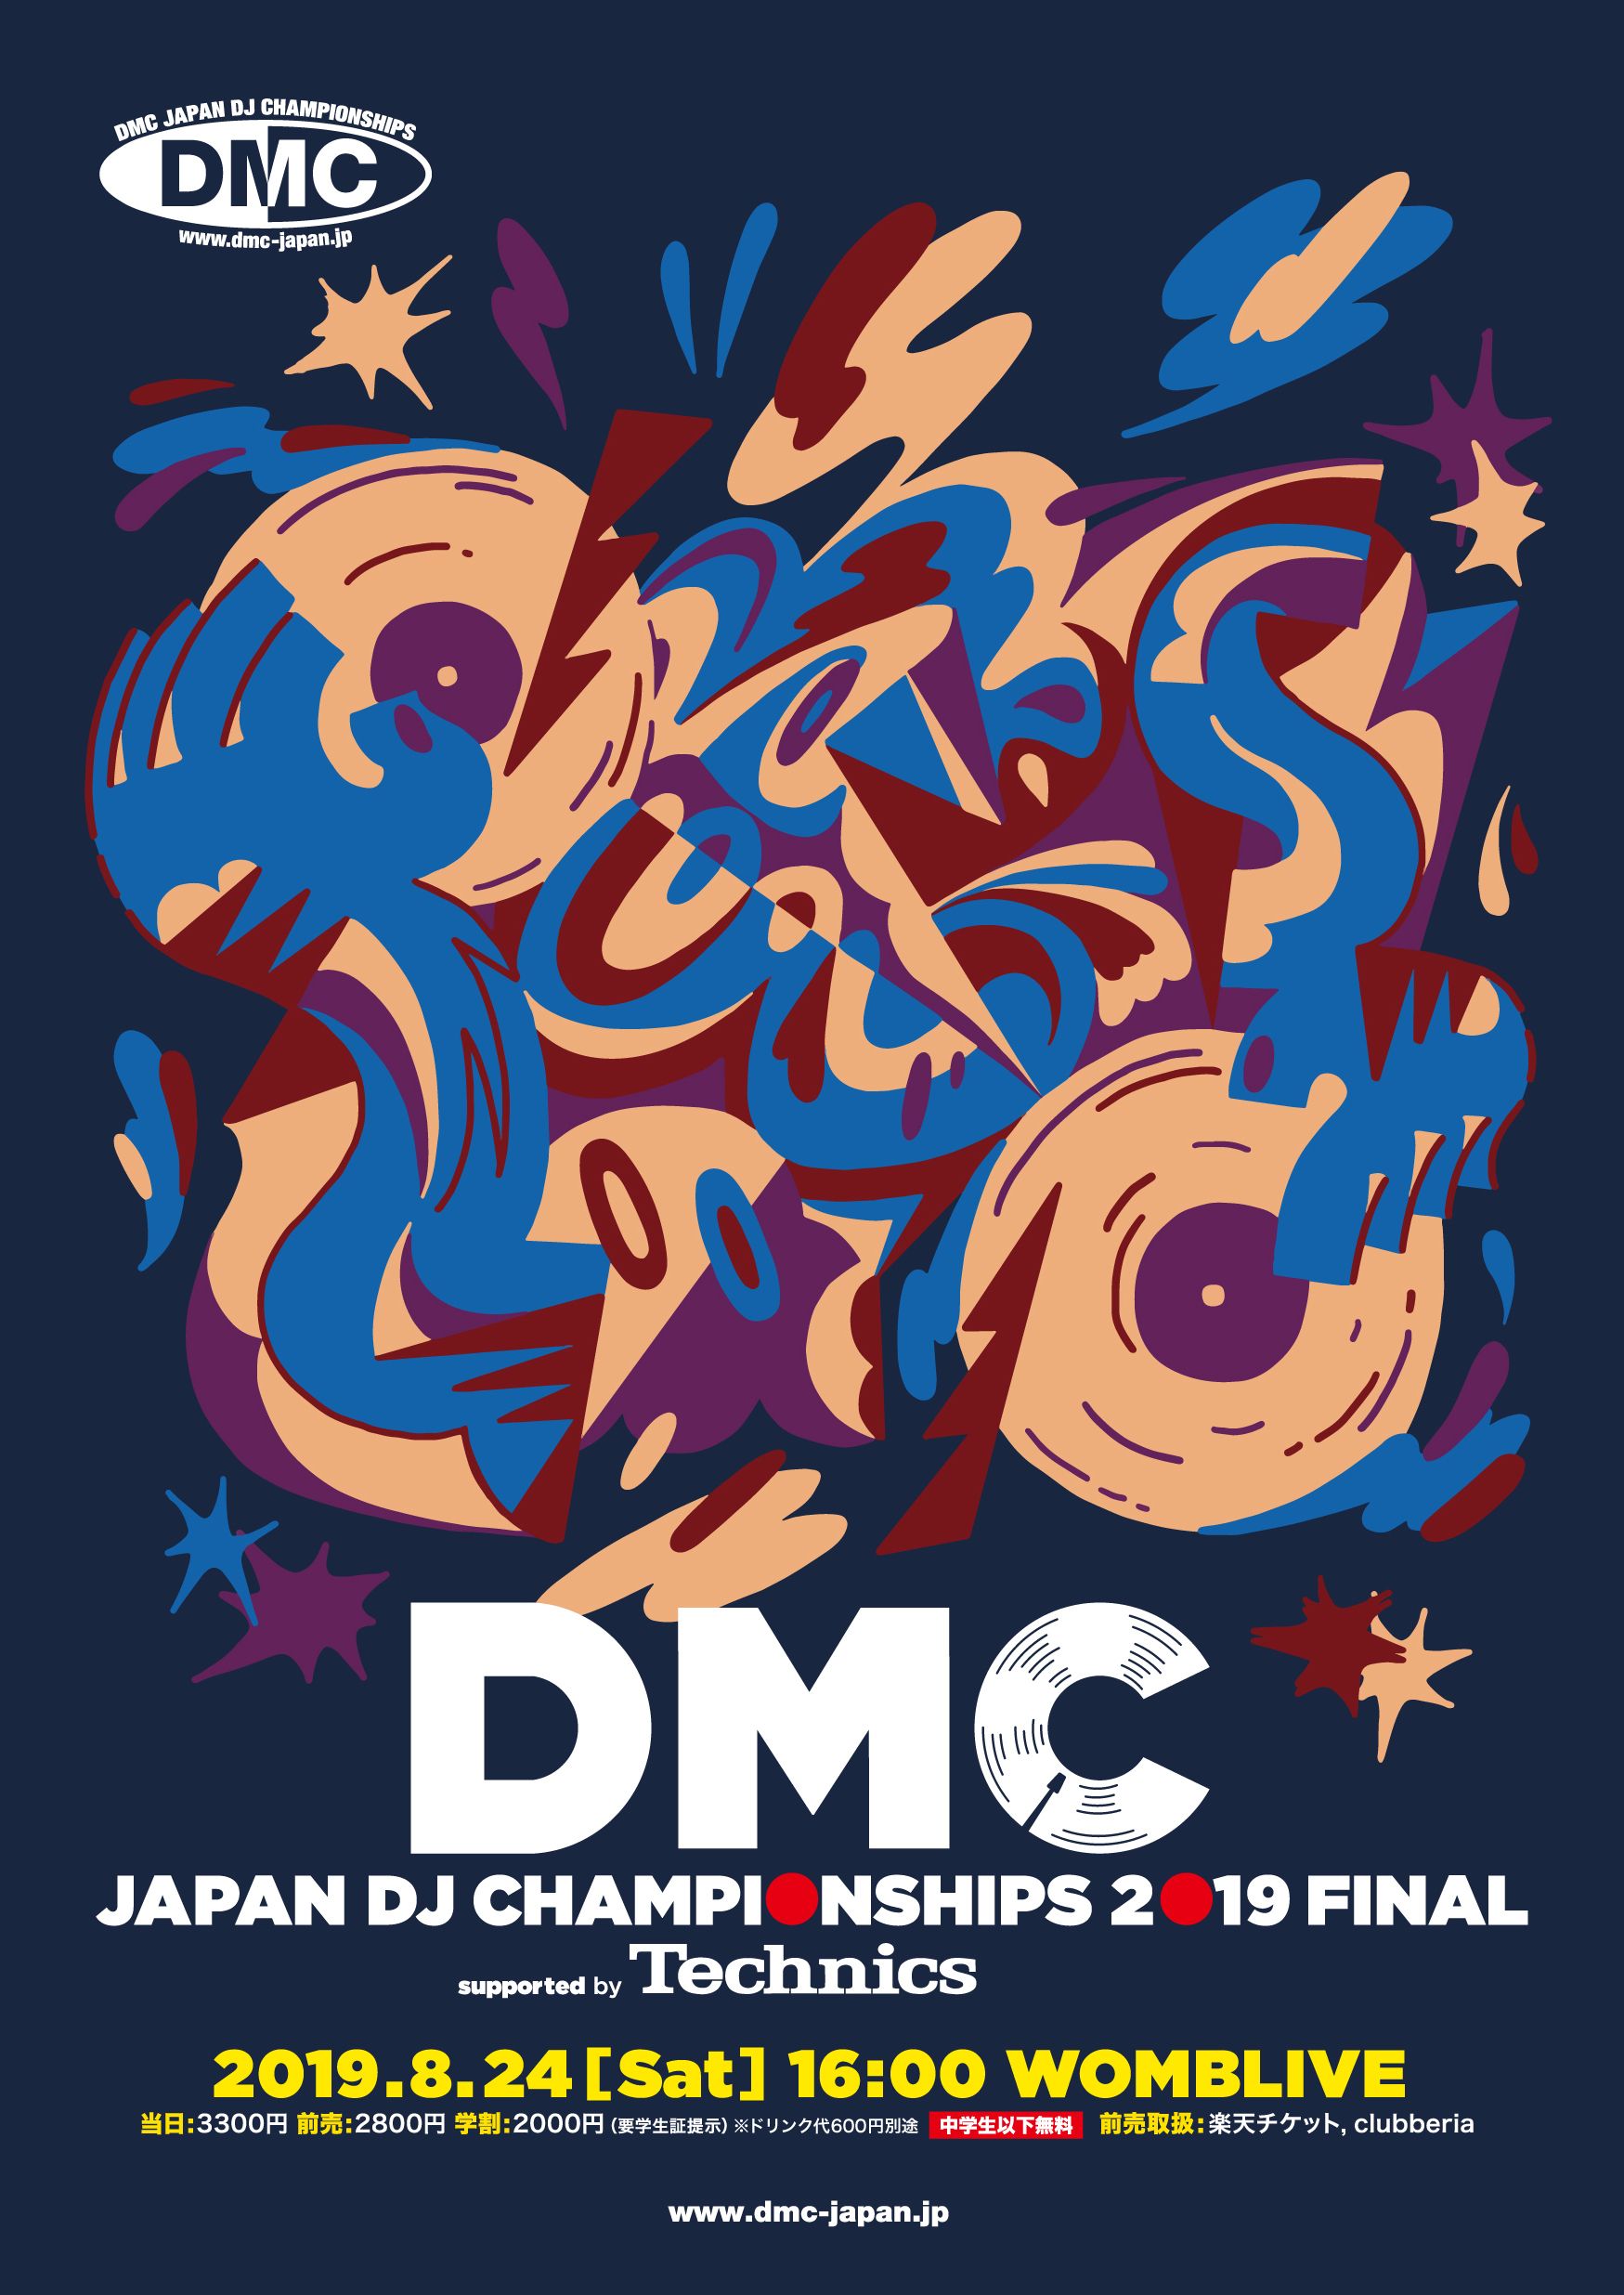 DMC JAPAN DJ CHAMPIONSHIP 2019 FINAL supported by Technics